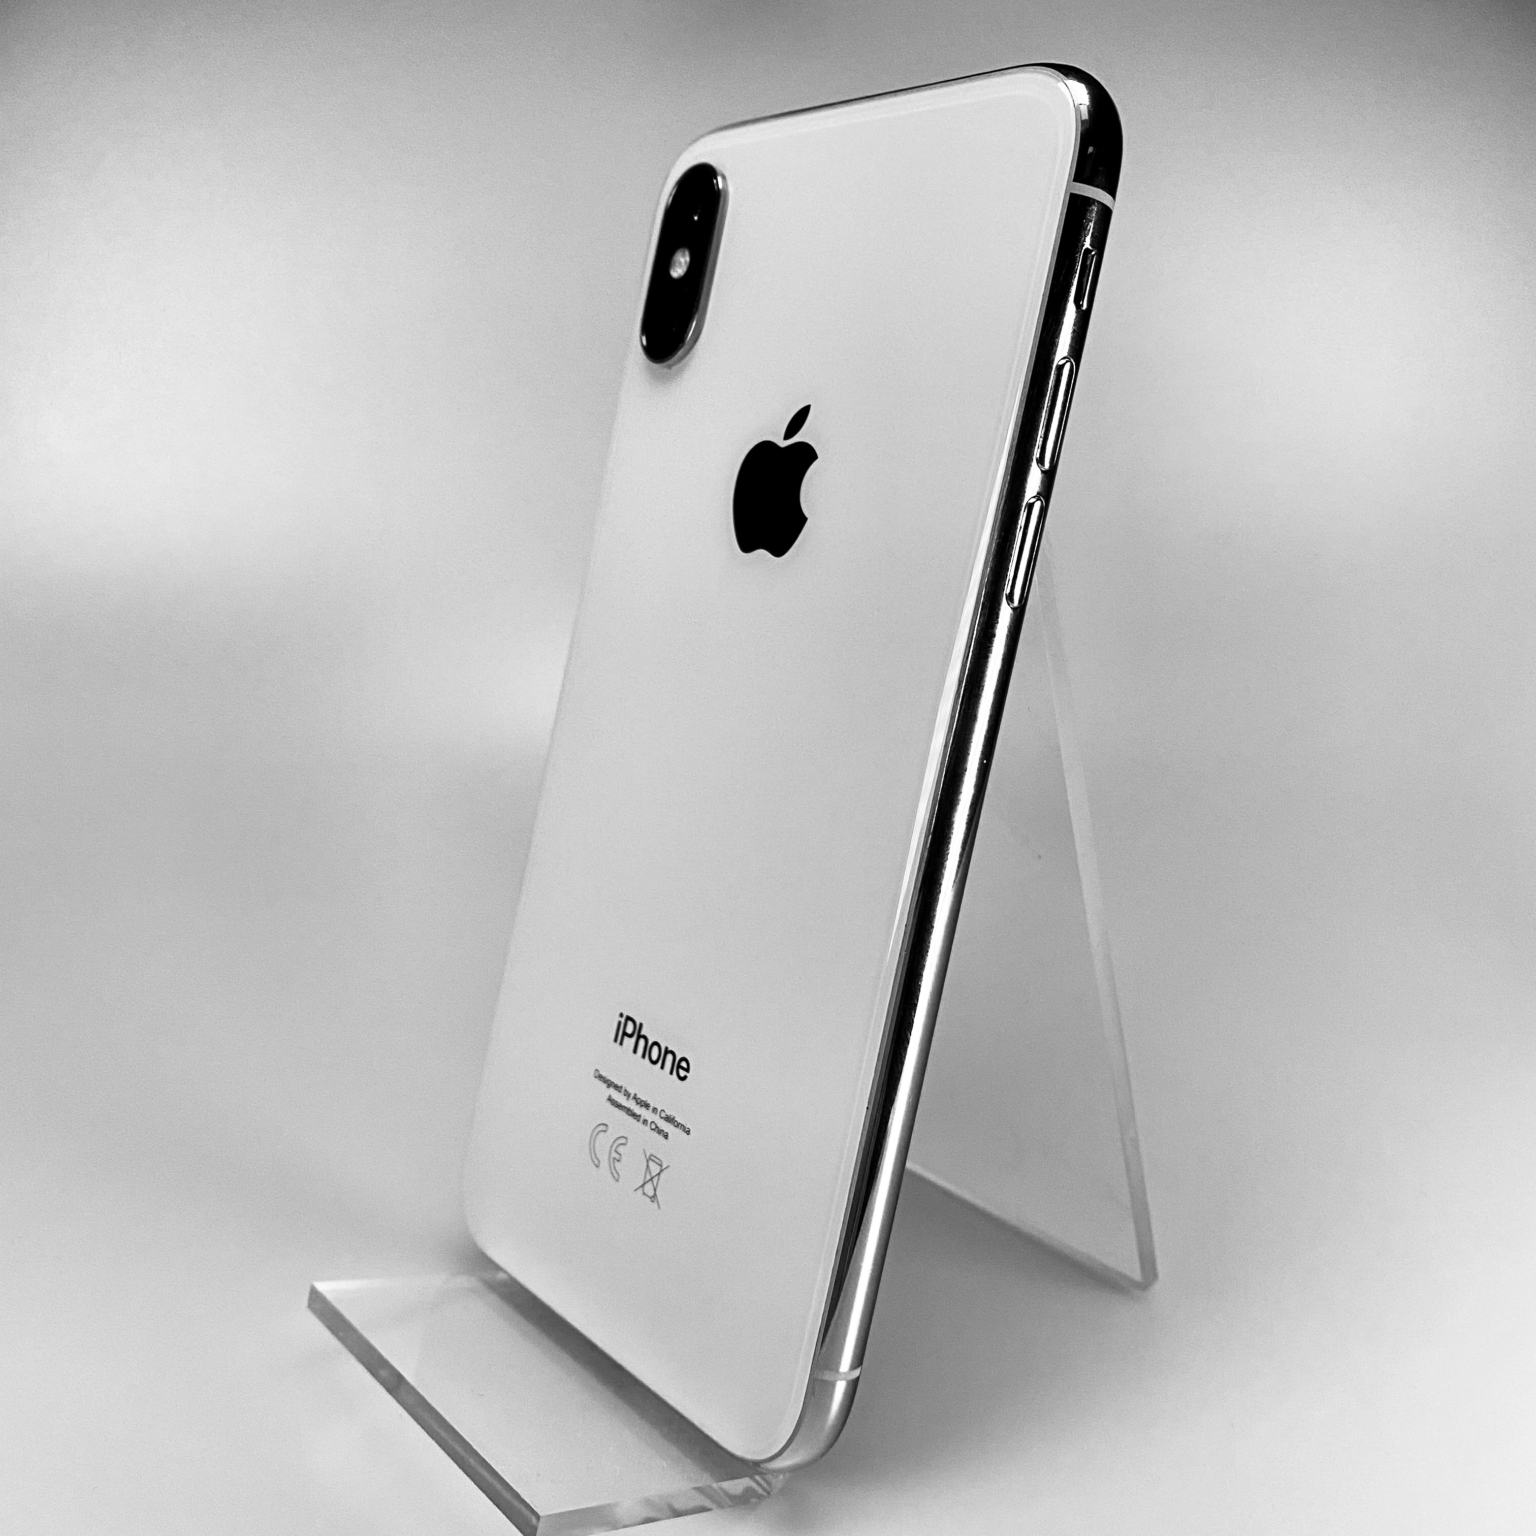 iPhone X Silver 64 GB 本体 ジャンク品+bonfanti.com.br